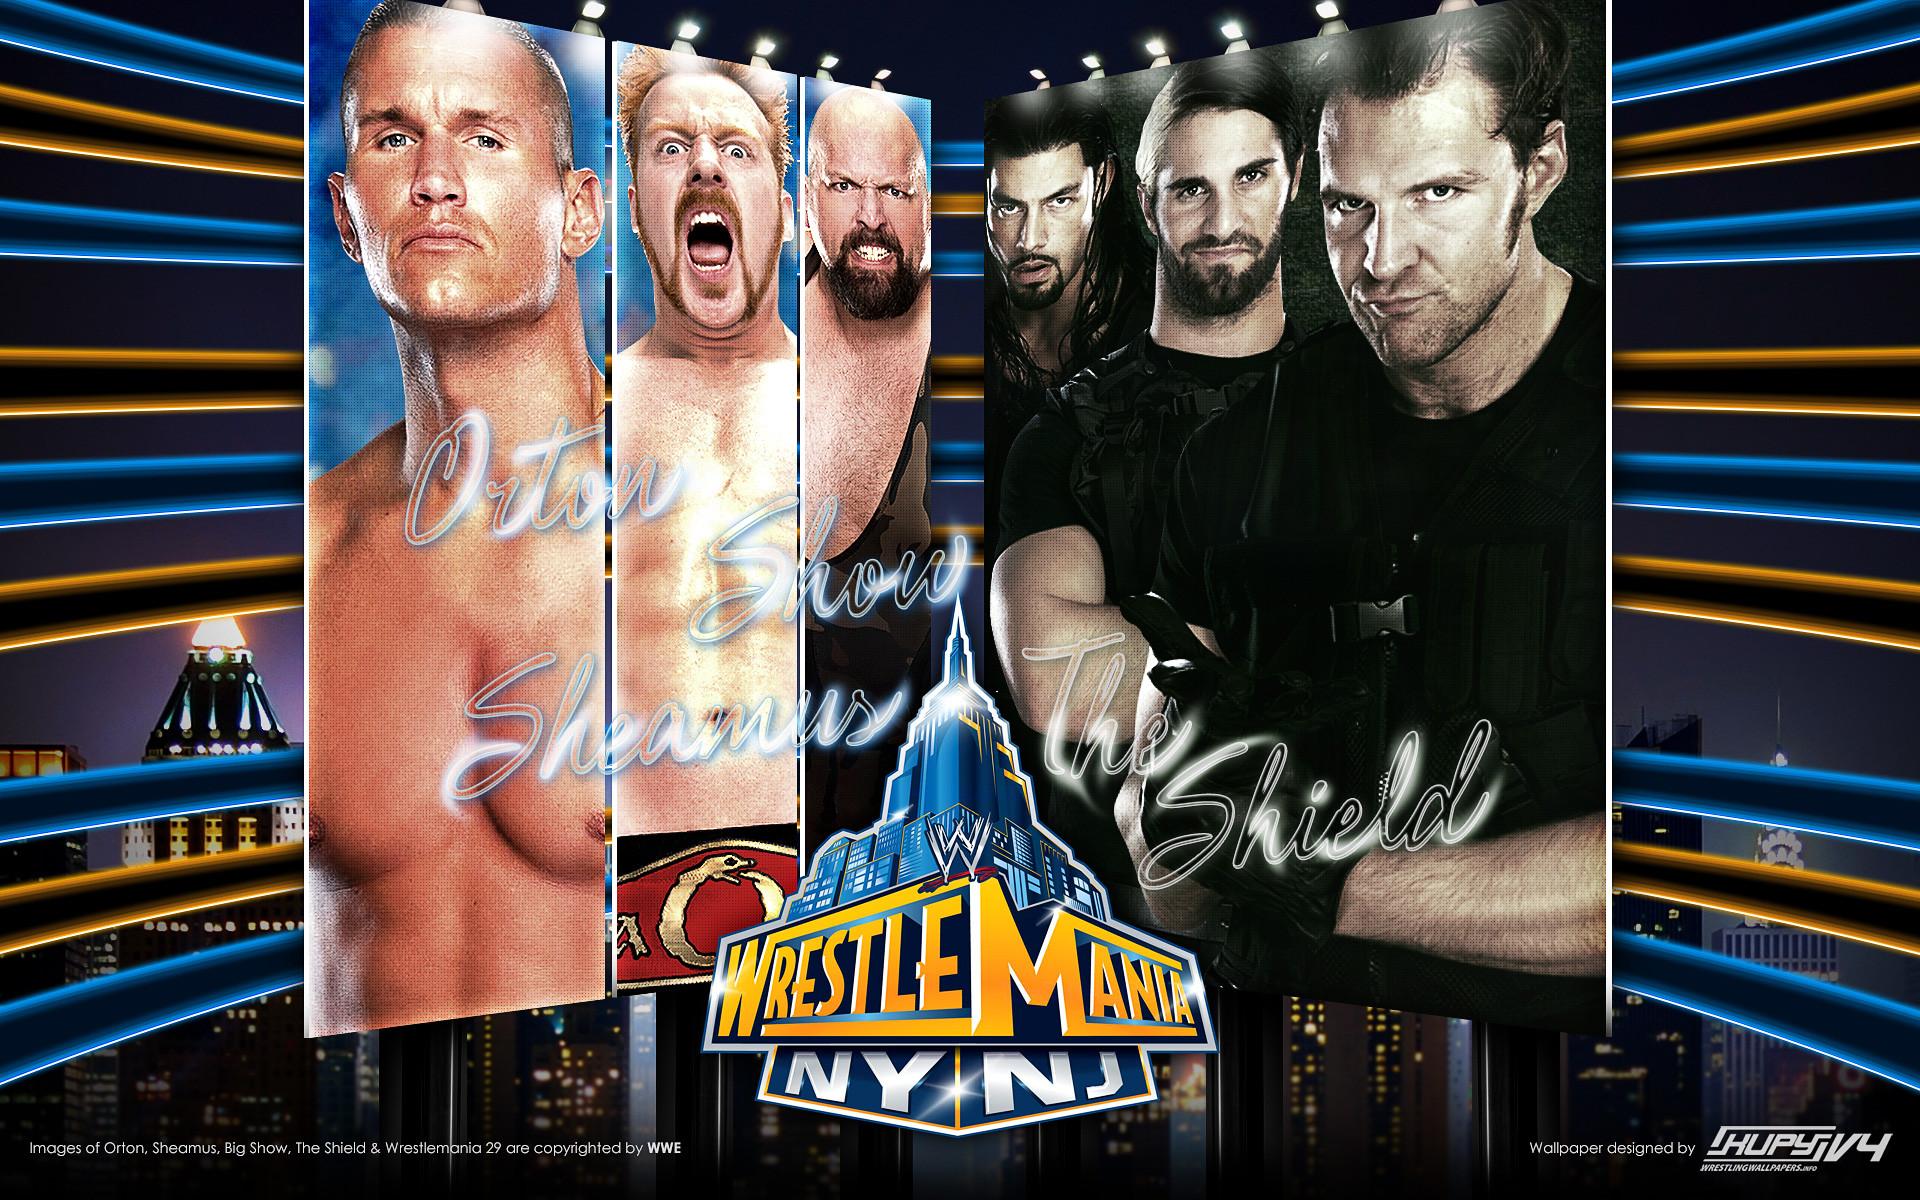 NEW WrestleMania 29 wallpaper: Randy Orton, Sheamus & Big Show vs